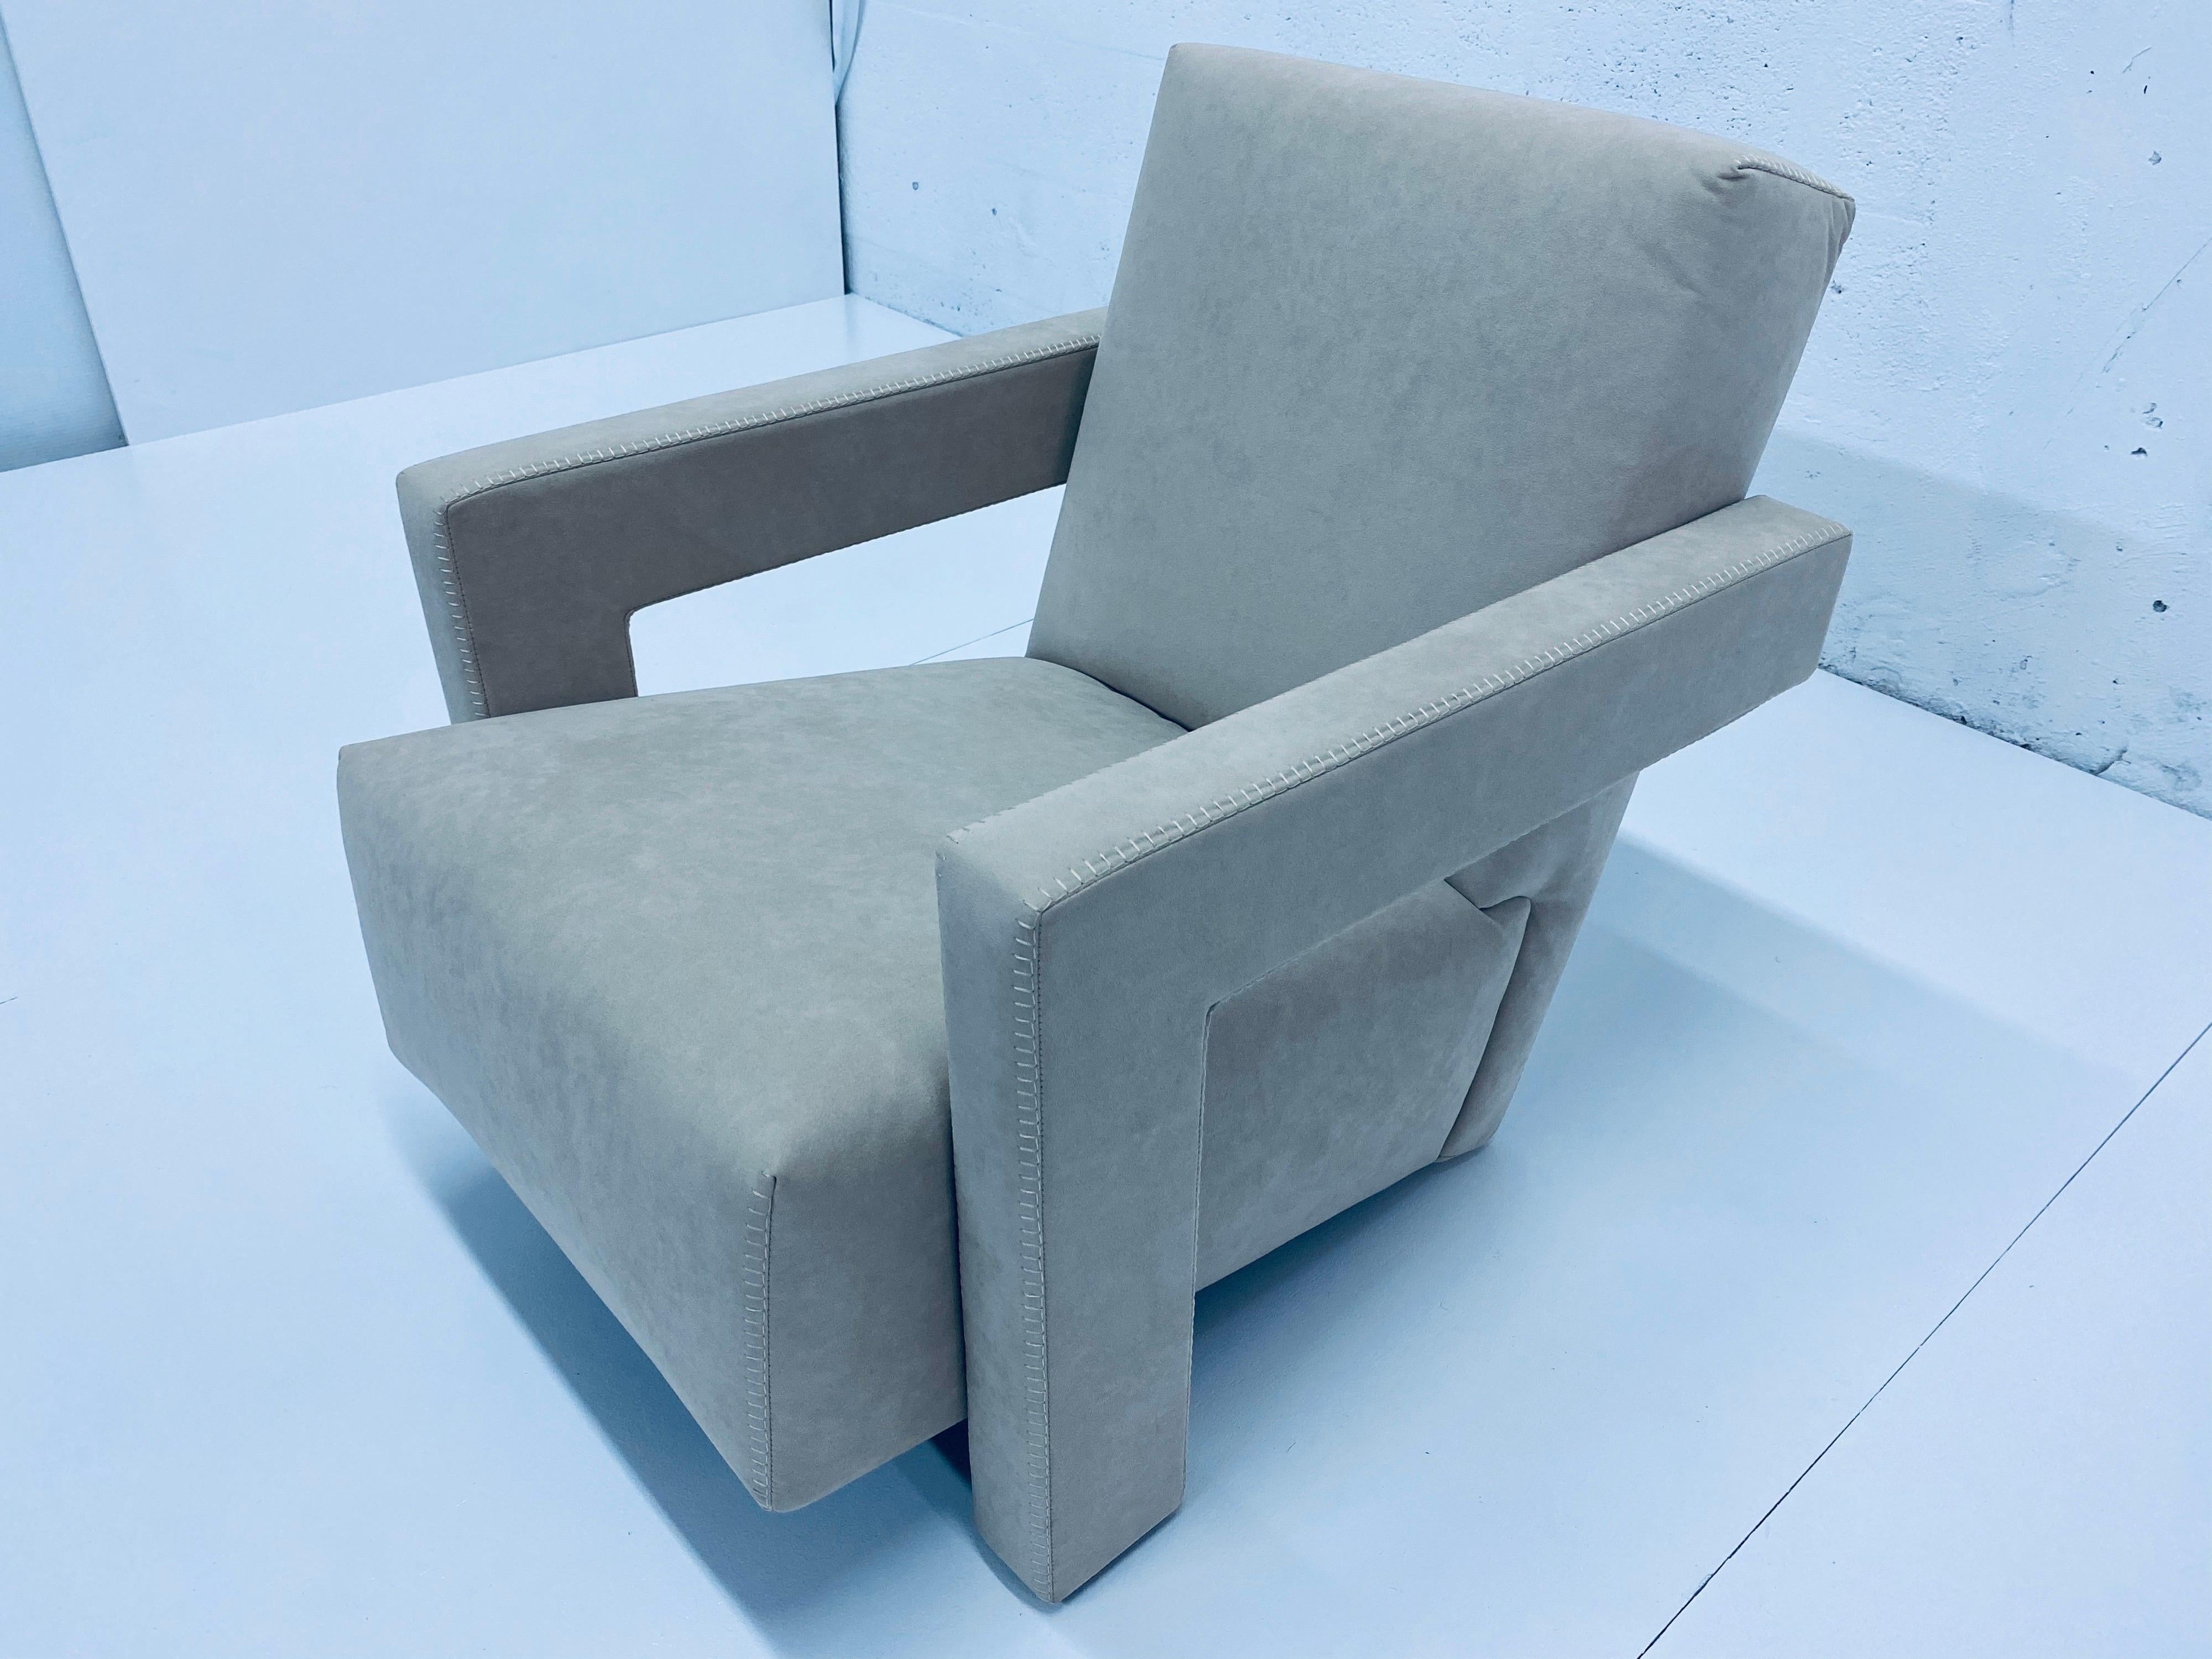 Suede Gerrit Rietveld “Utrecht” Lounge Chair for Cassina